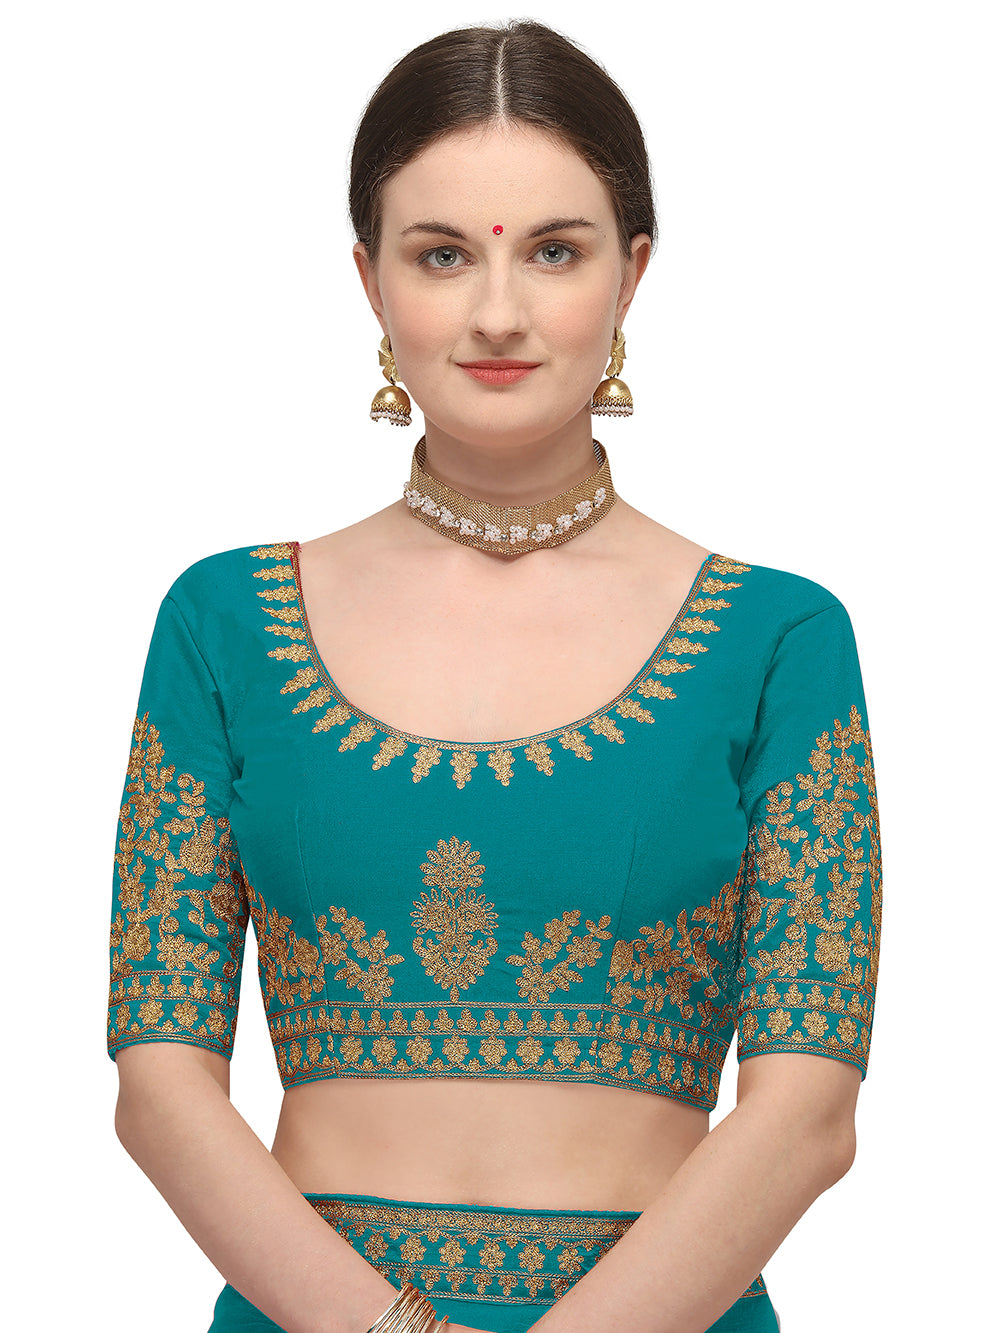 Women's Ahir Embroidery Work Border Wedding Wear Dupion Silk Saree With Blouse Piece (Sky Blue) - NIMIDHYA